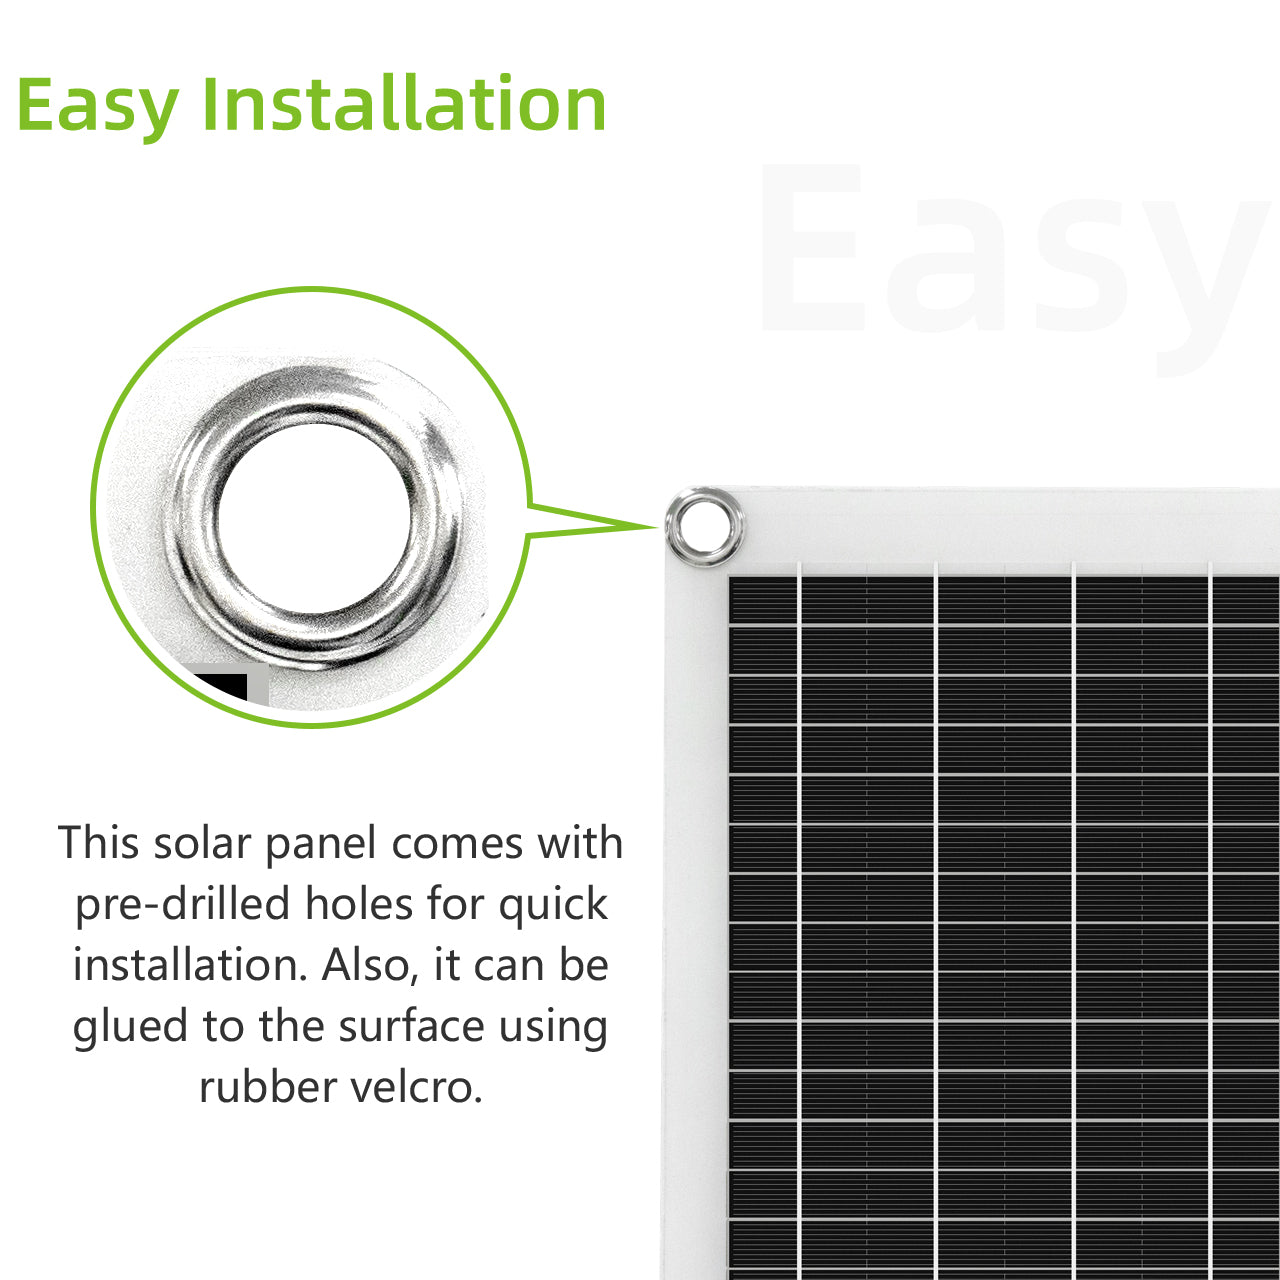 ROCKSOLAR 30W 12V Flexible Solar Panel Basic Kit with PWM Controller